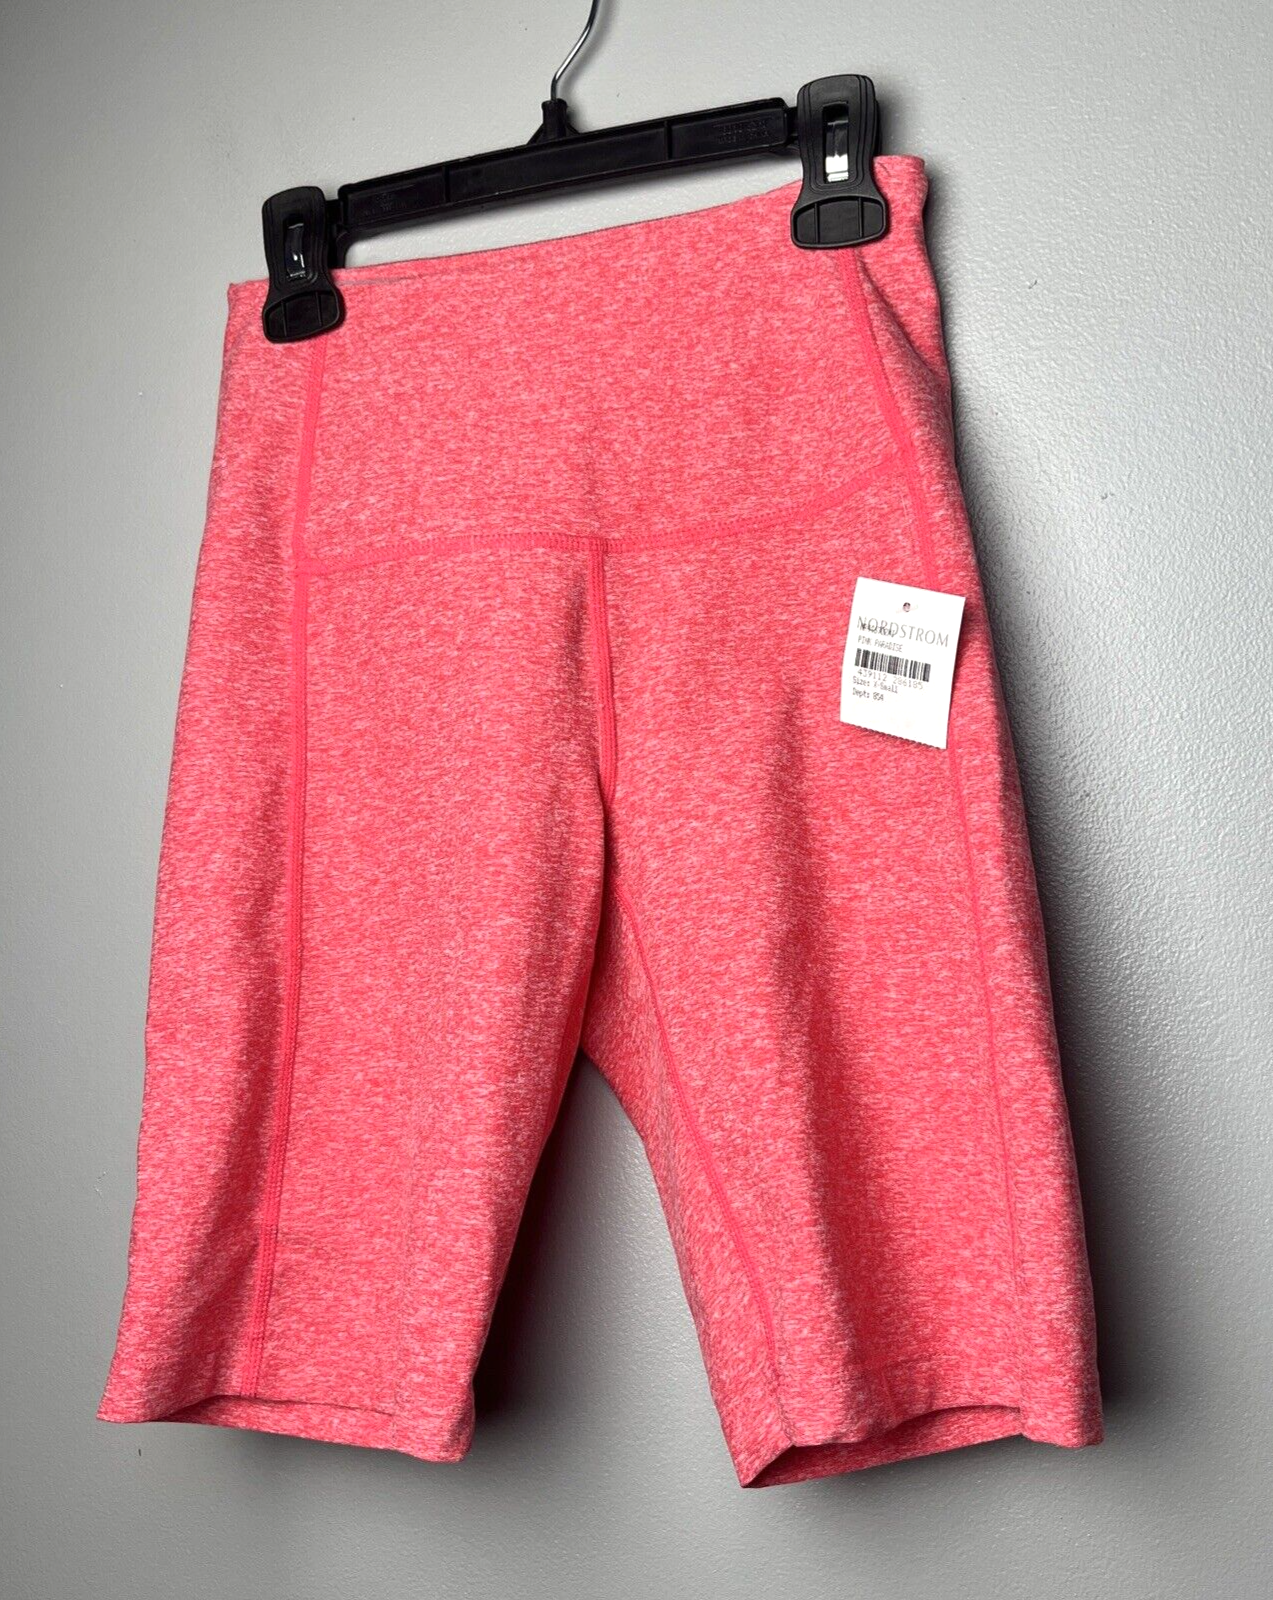 Zella Shorts Restore Long Bike Shorts Pink Sz XS NEW NWT N102